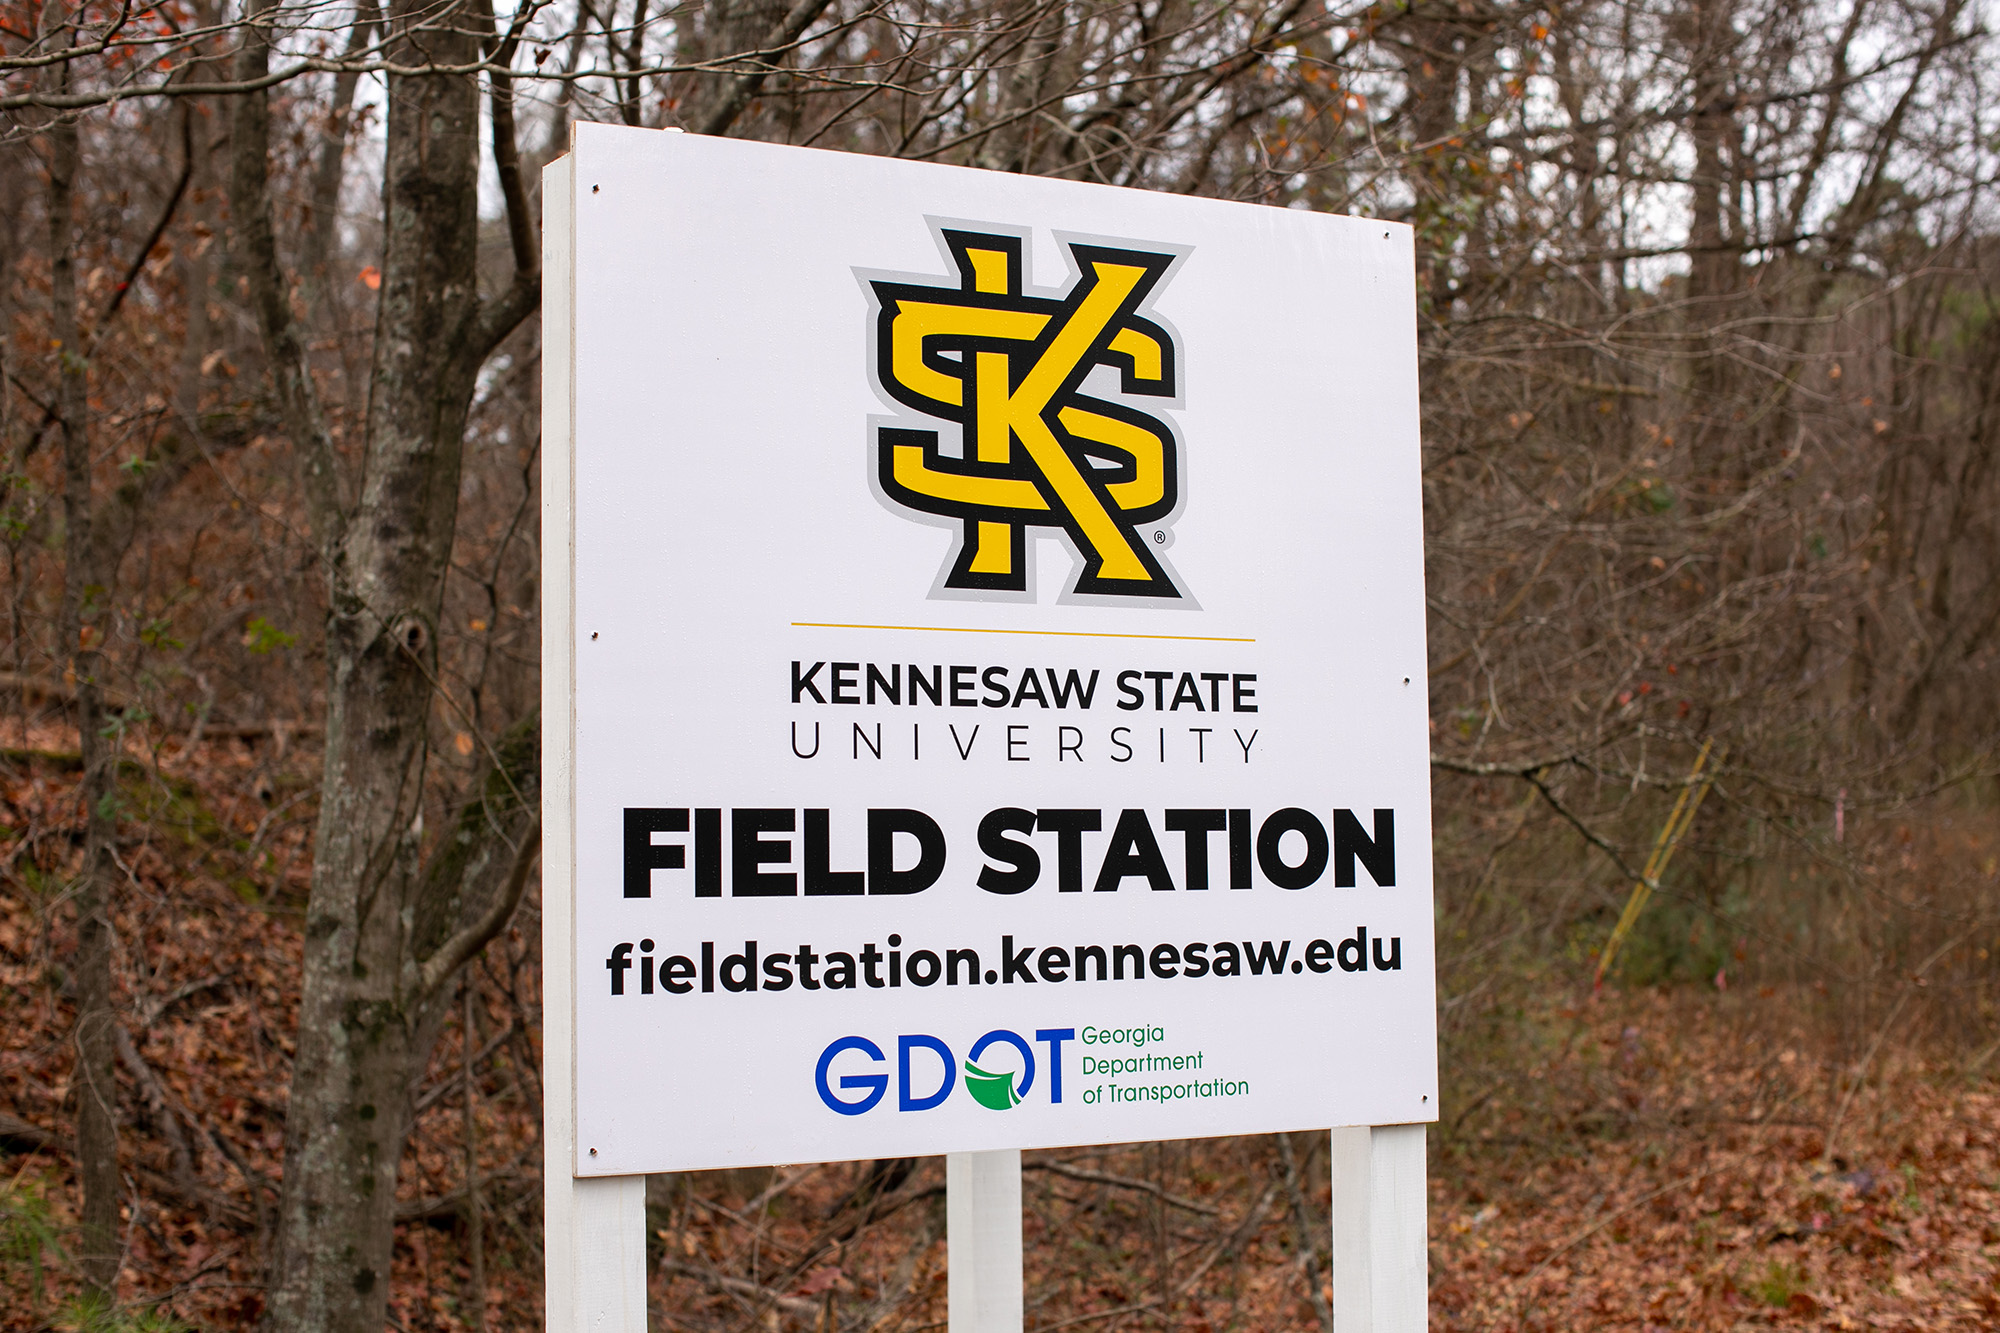 Field Station signage